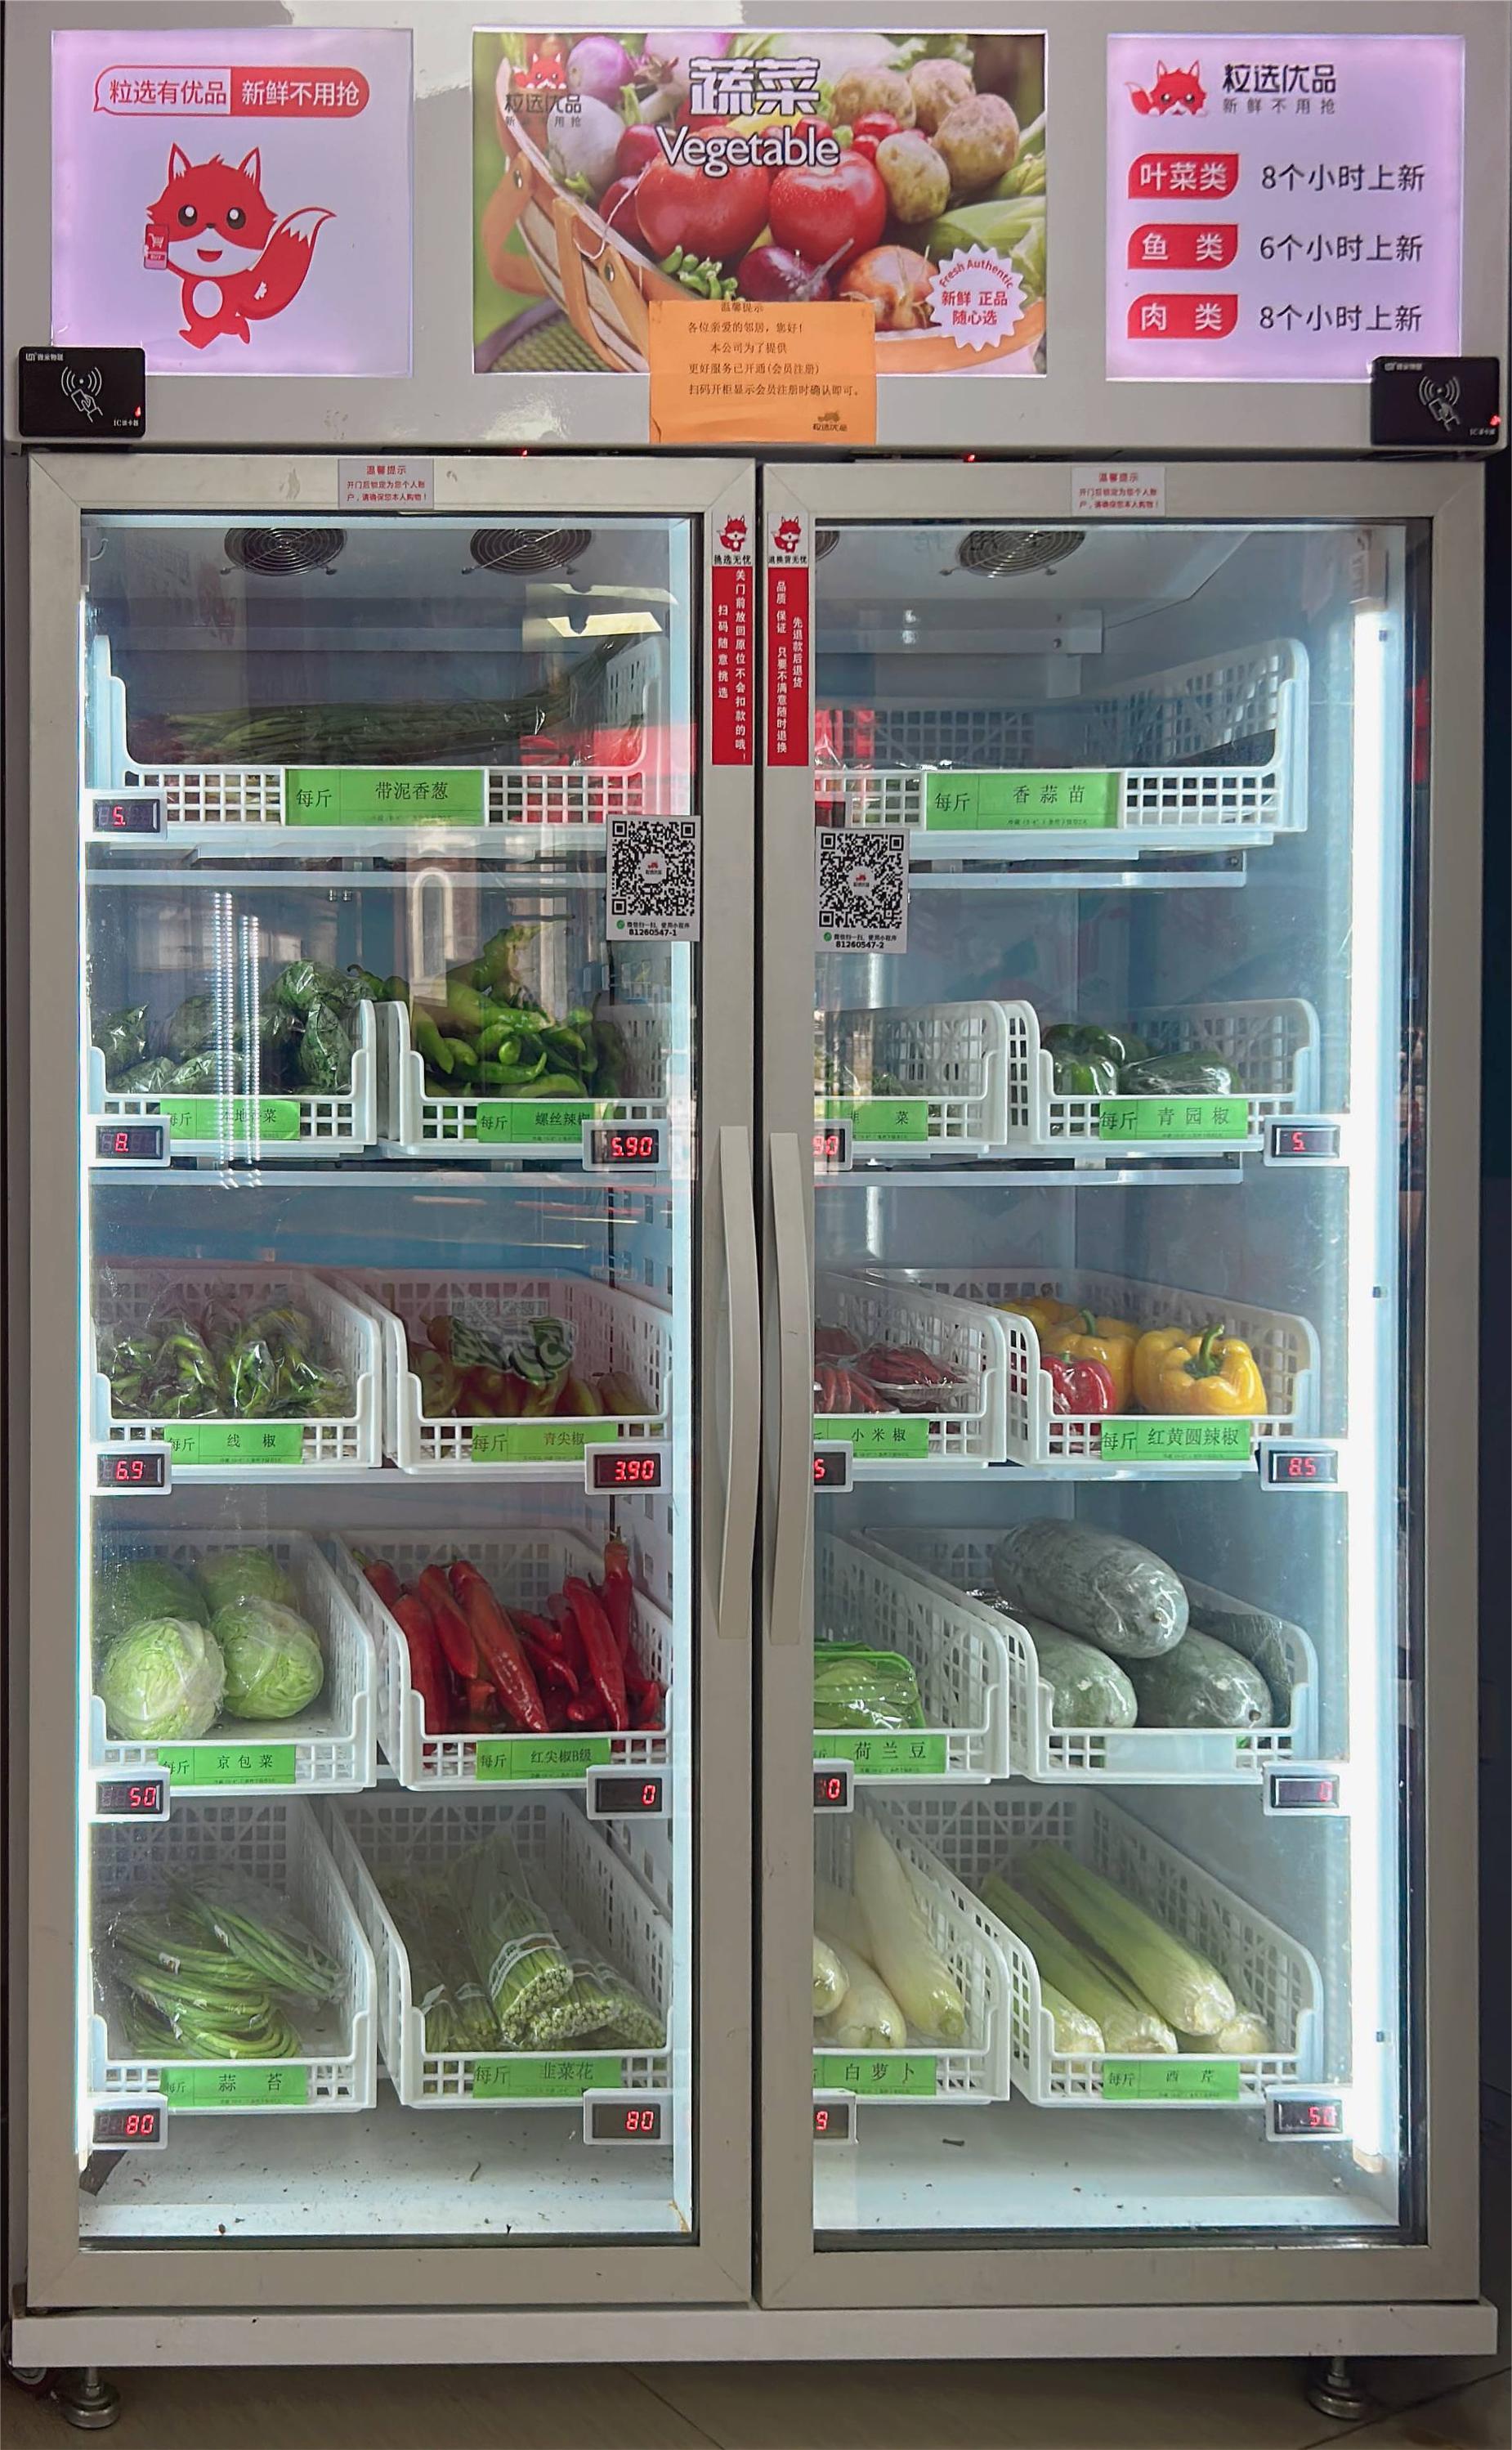  smart fridge vending machine for selling fresh fruits and vegetables